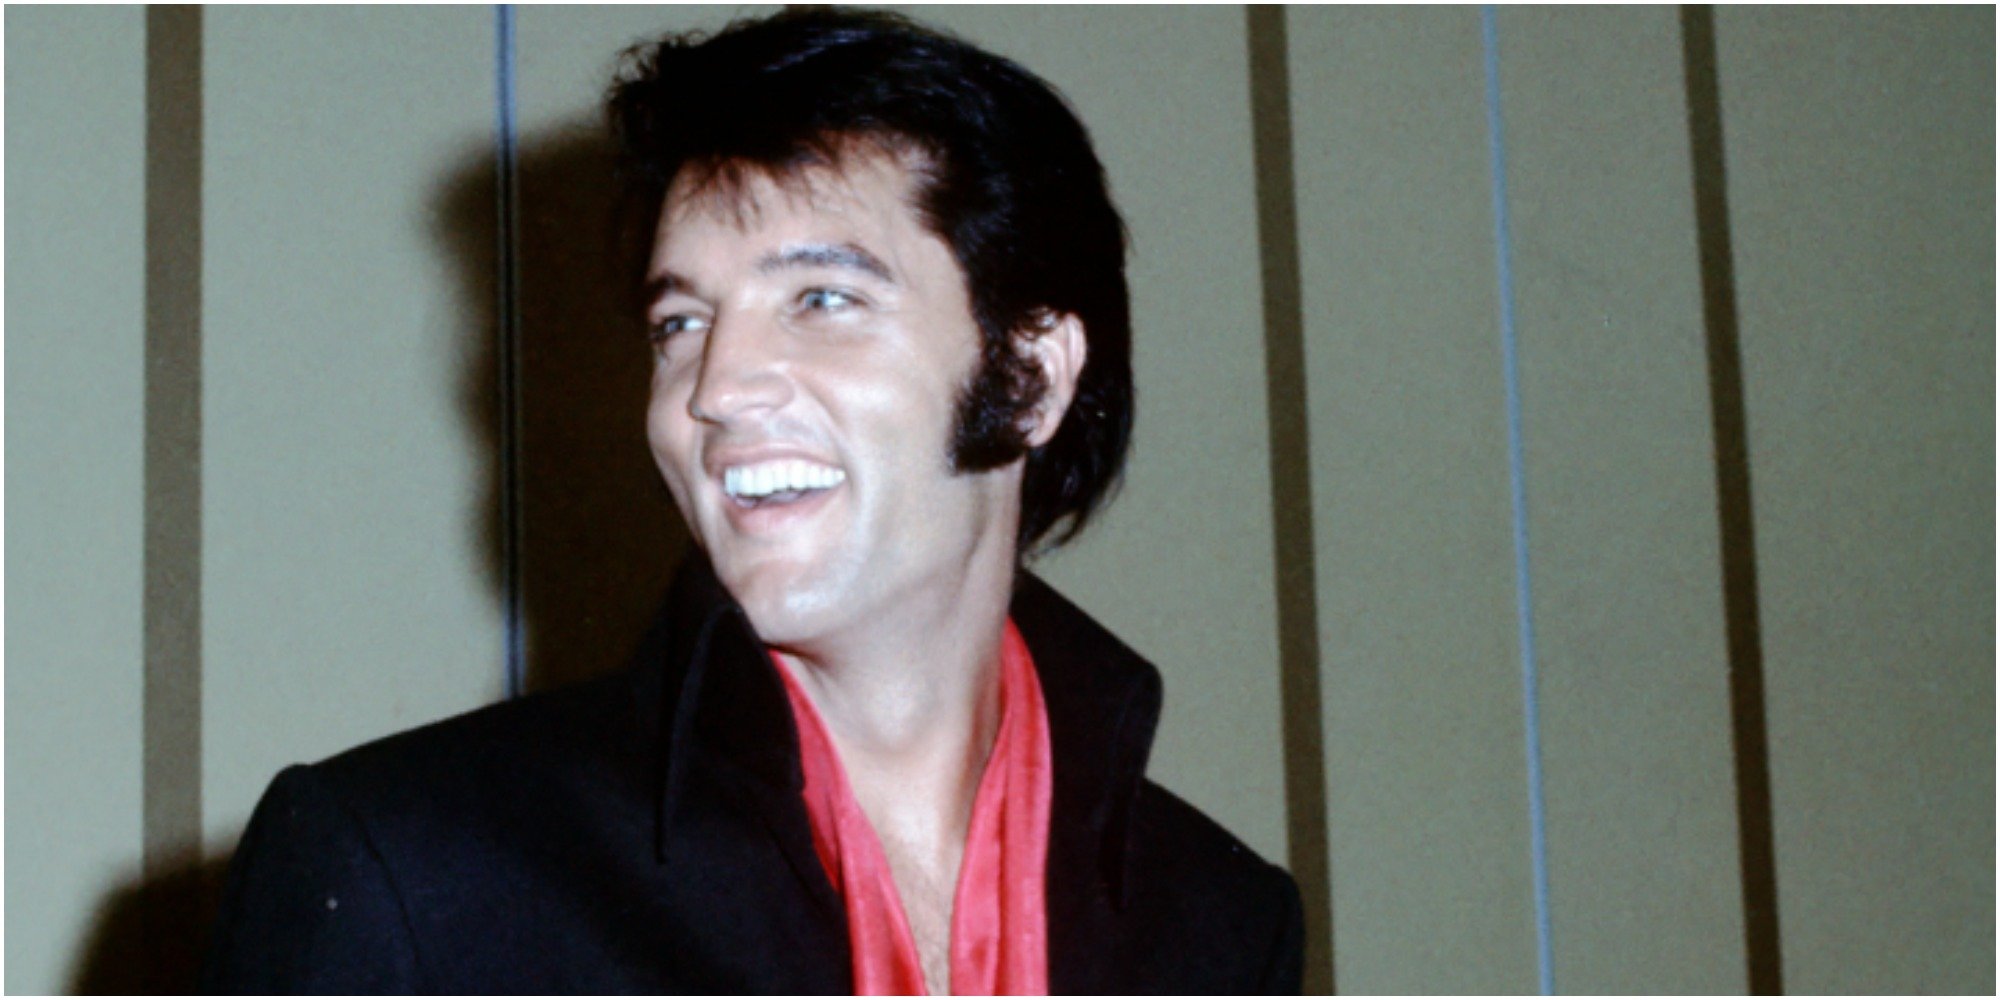 Elvis Presley pictured in 1969.